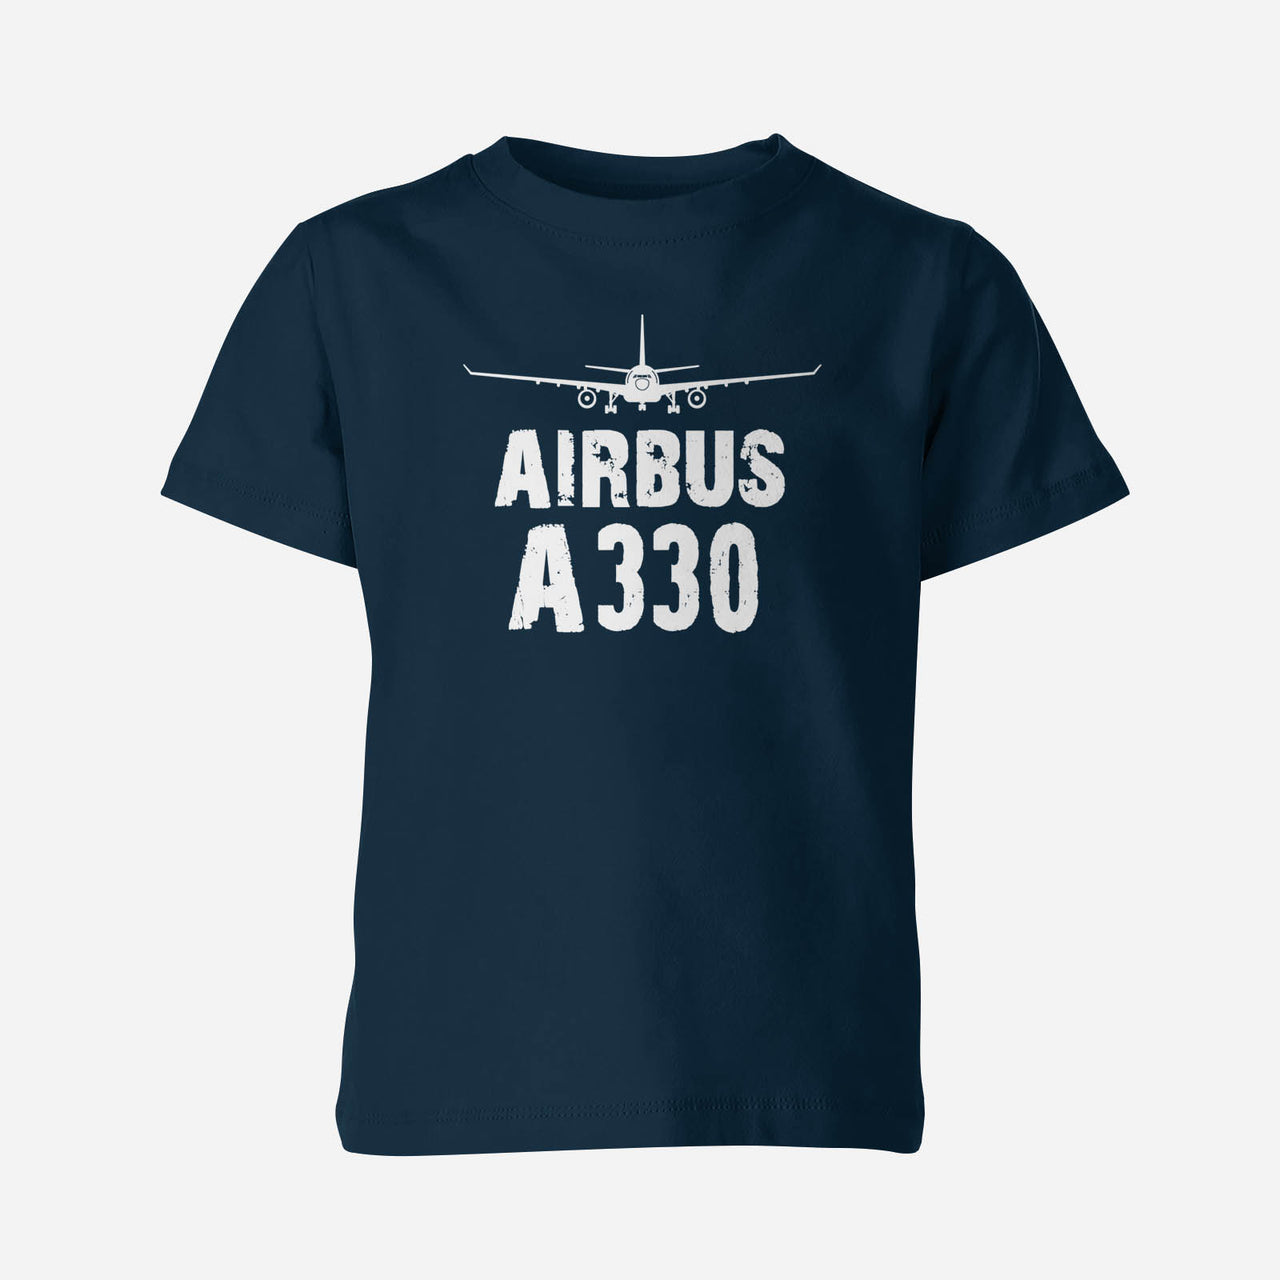 Airbus A330 & Plane Designed Children T-Shirts